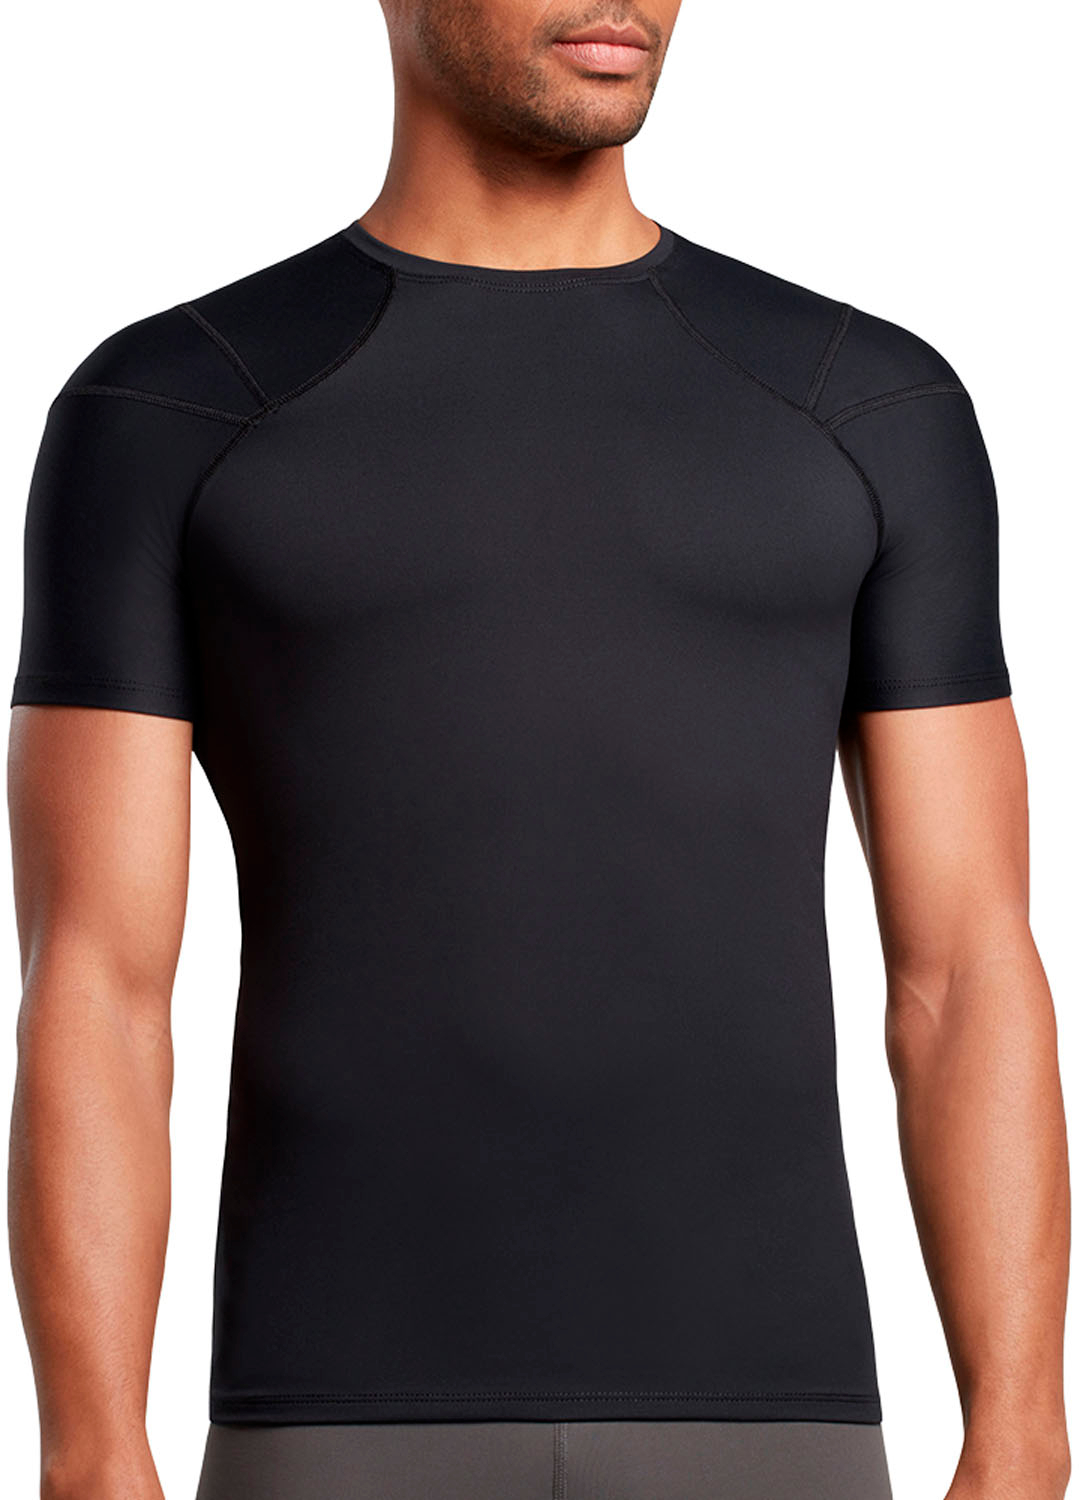 Tommie Copper Shoulder Centric Support Shirt TV Spot, 'Unwrap